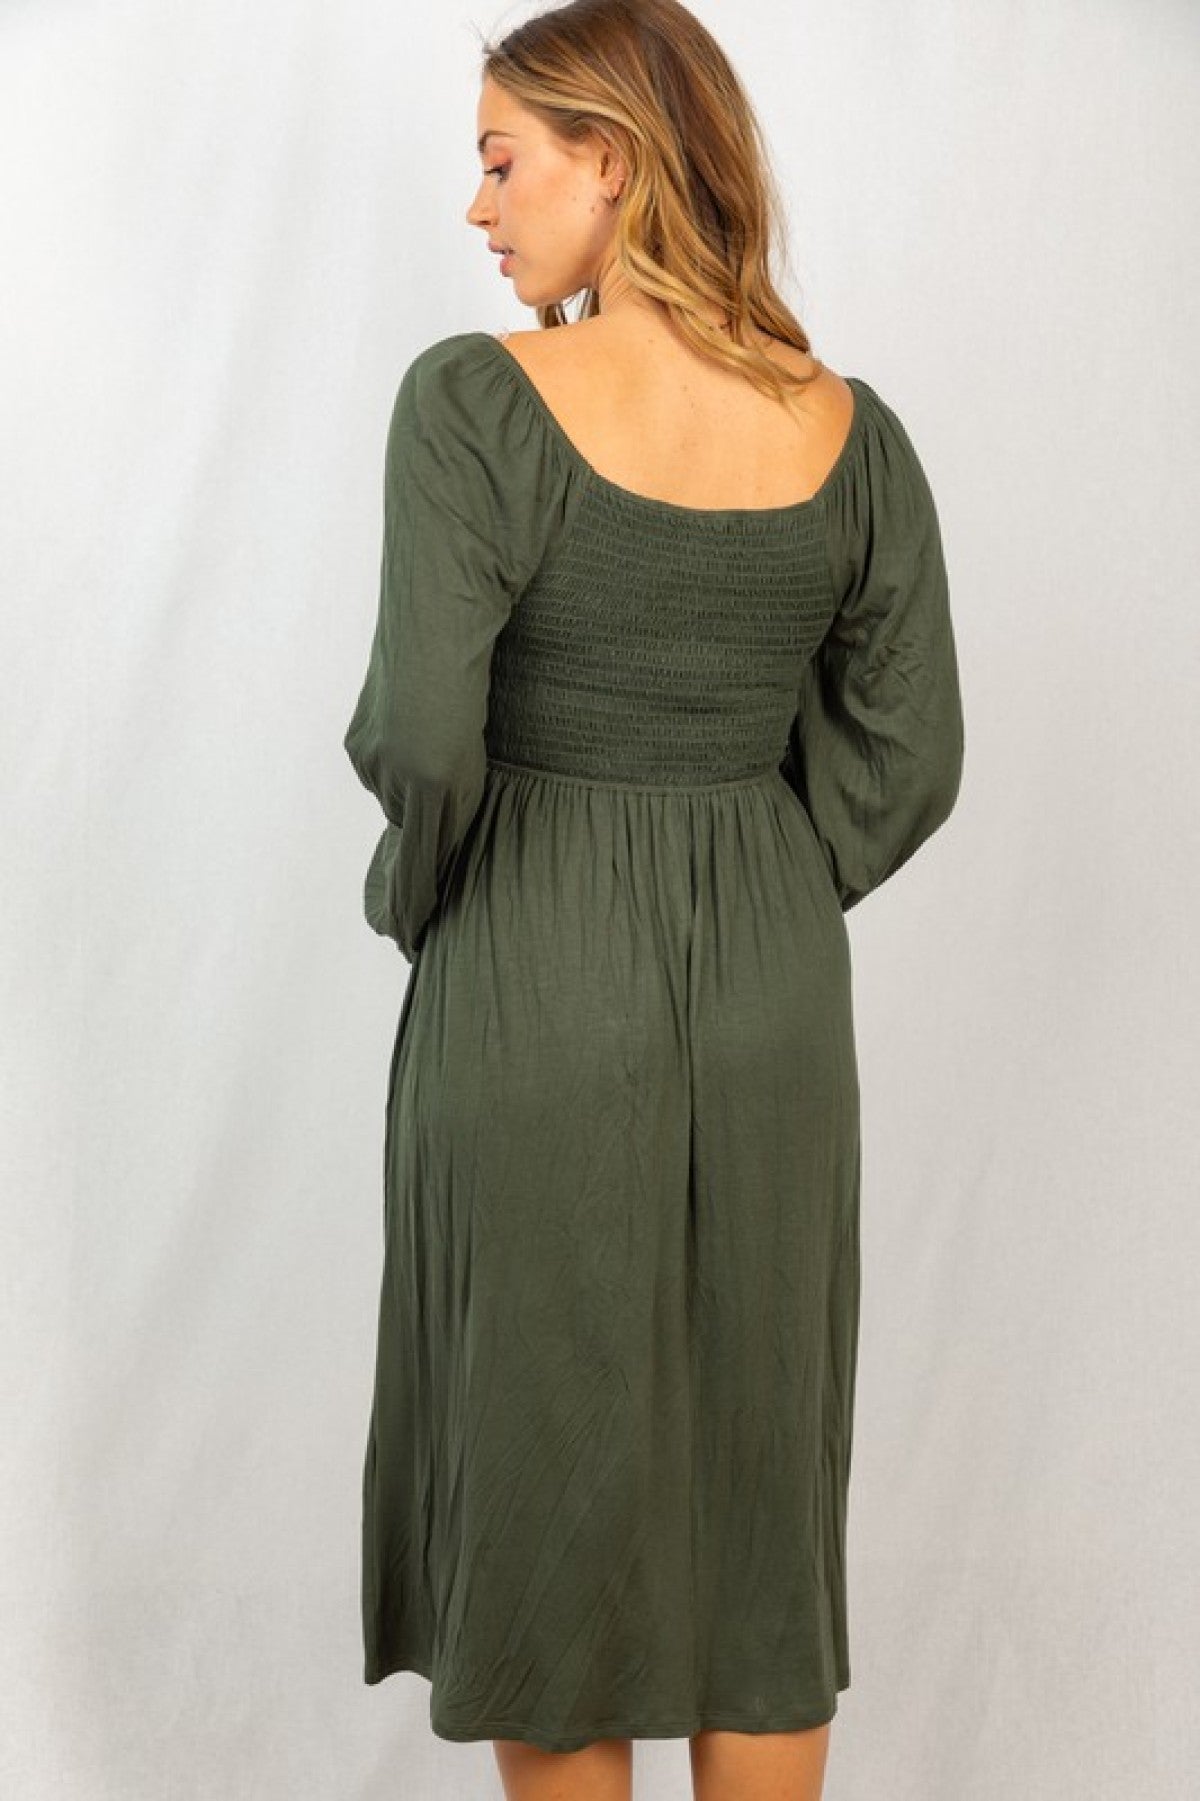 Long Sleeve Solid Knit Dress Angelwarriorfitness.com